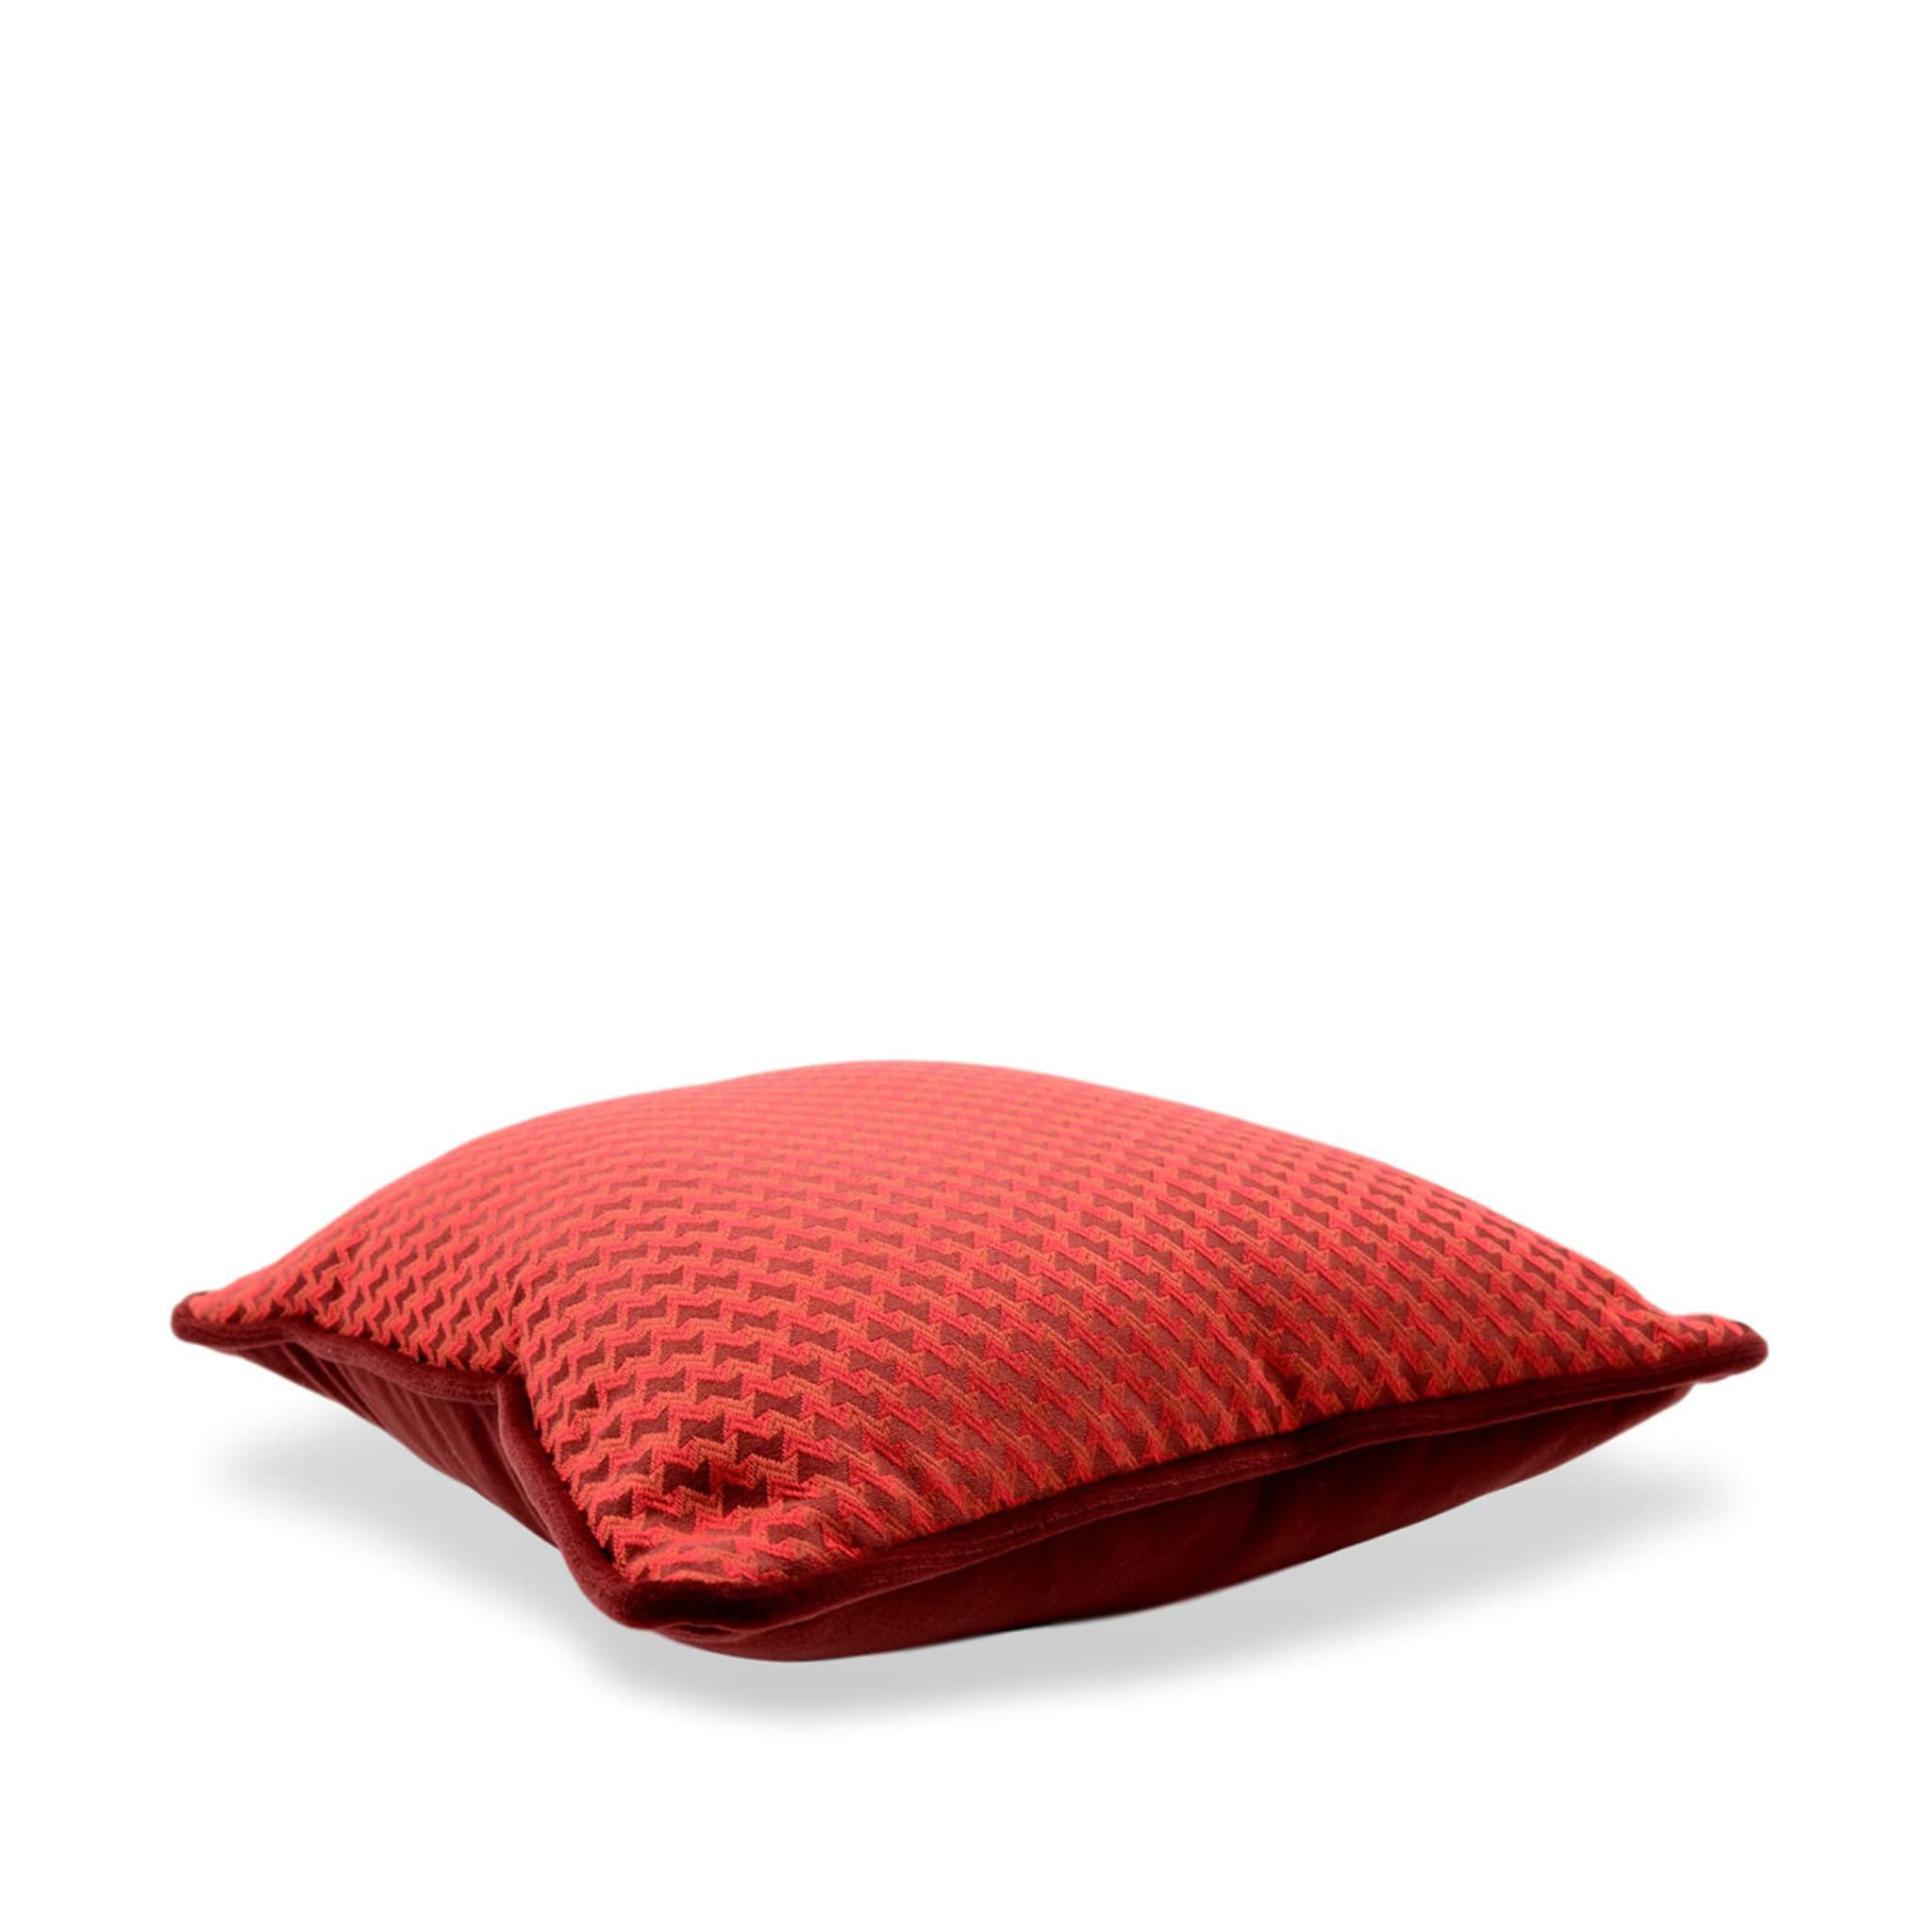 Coussin Carrè rouge en tissu jacquard à micro motifs - Vue alternative 1